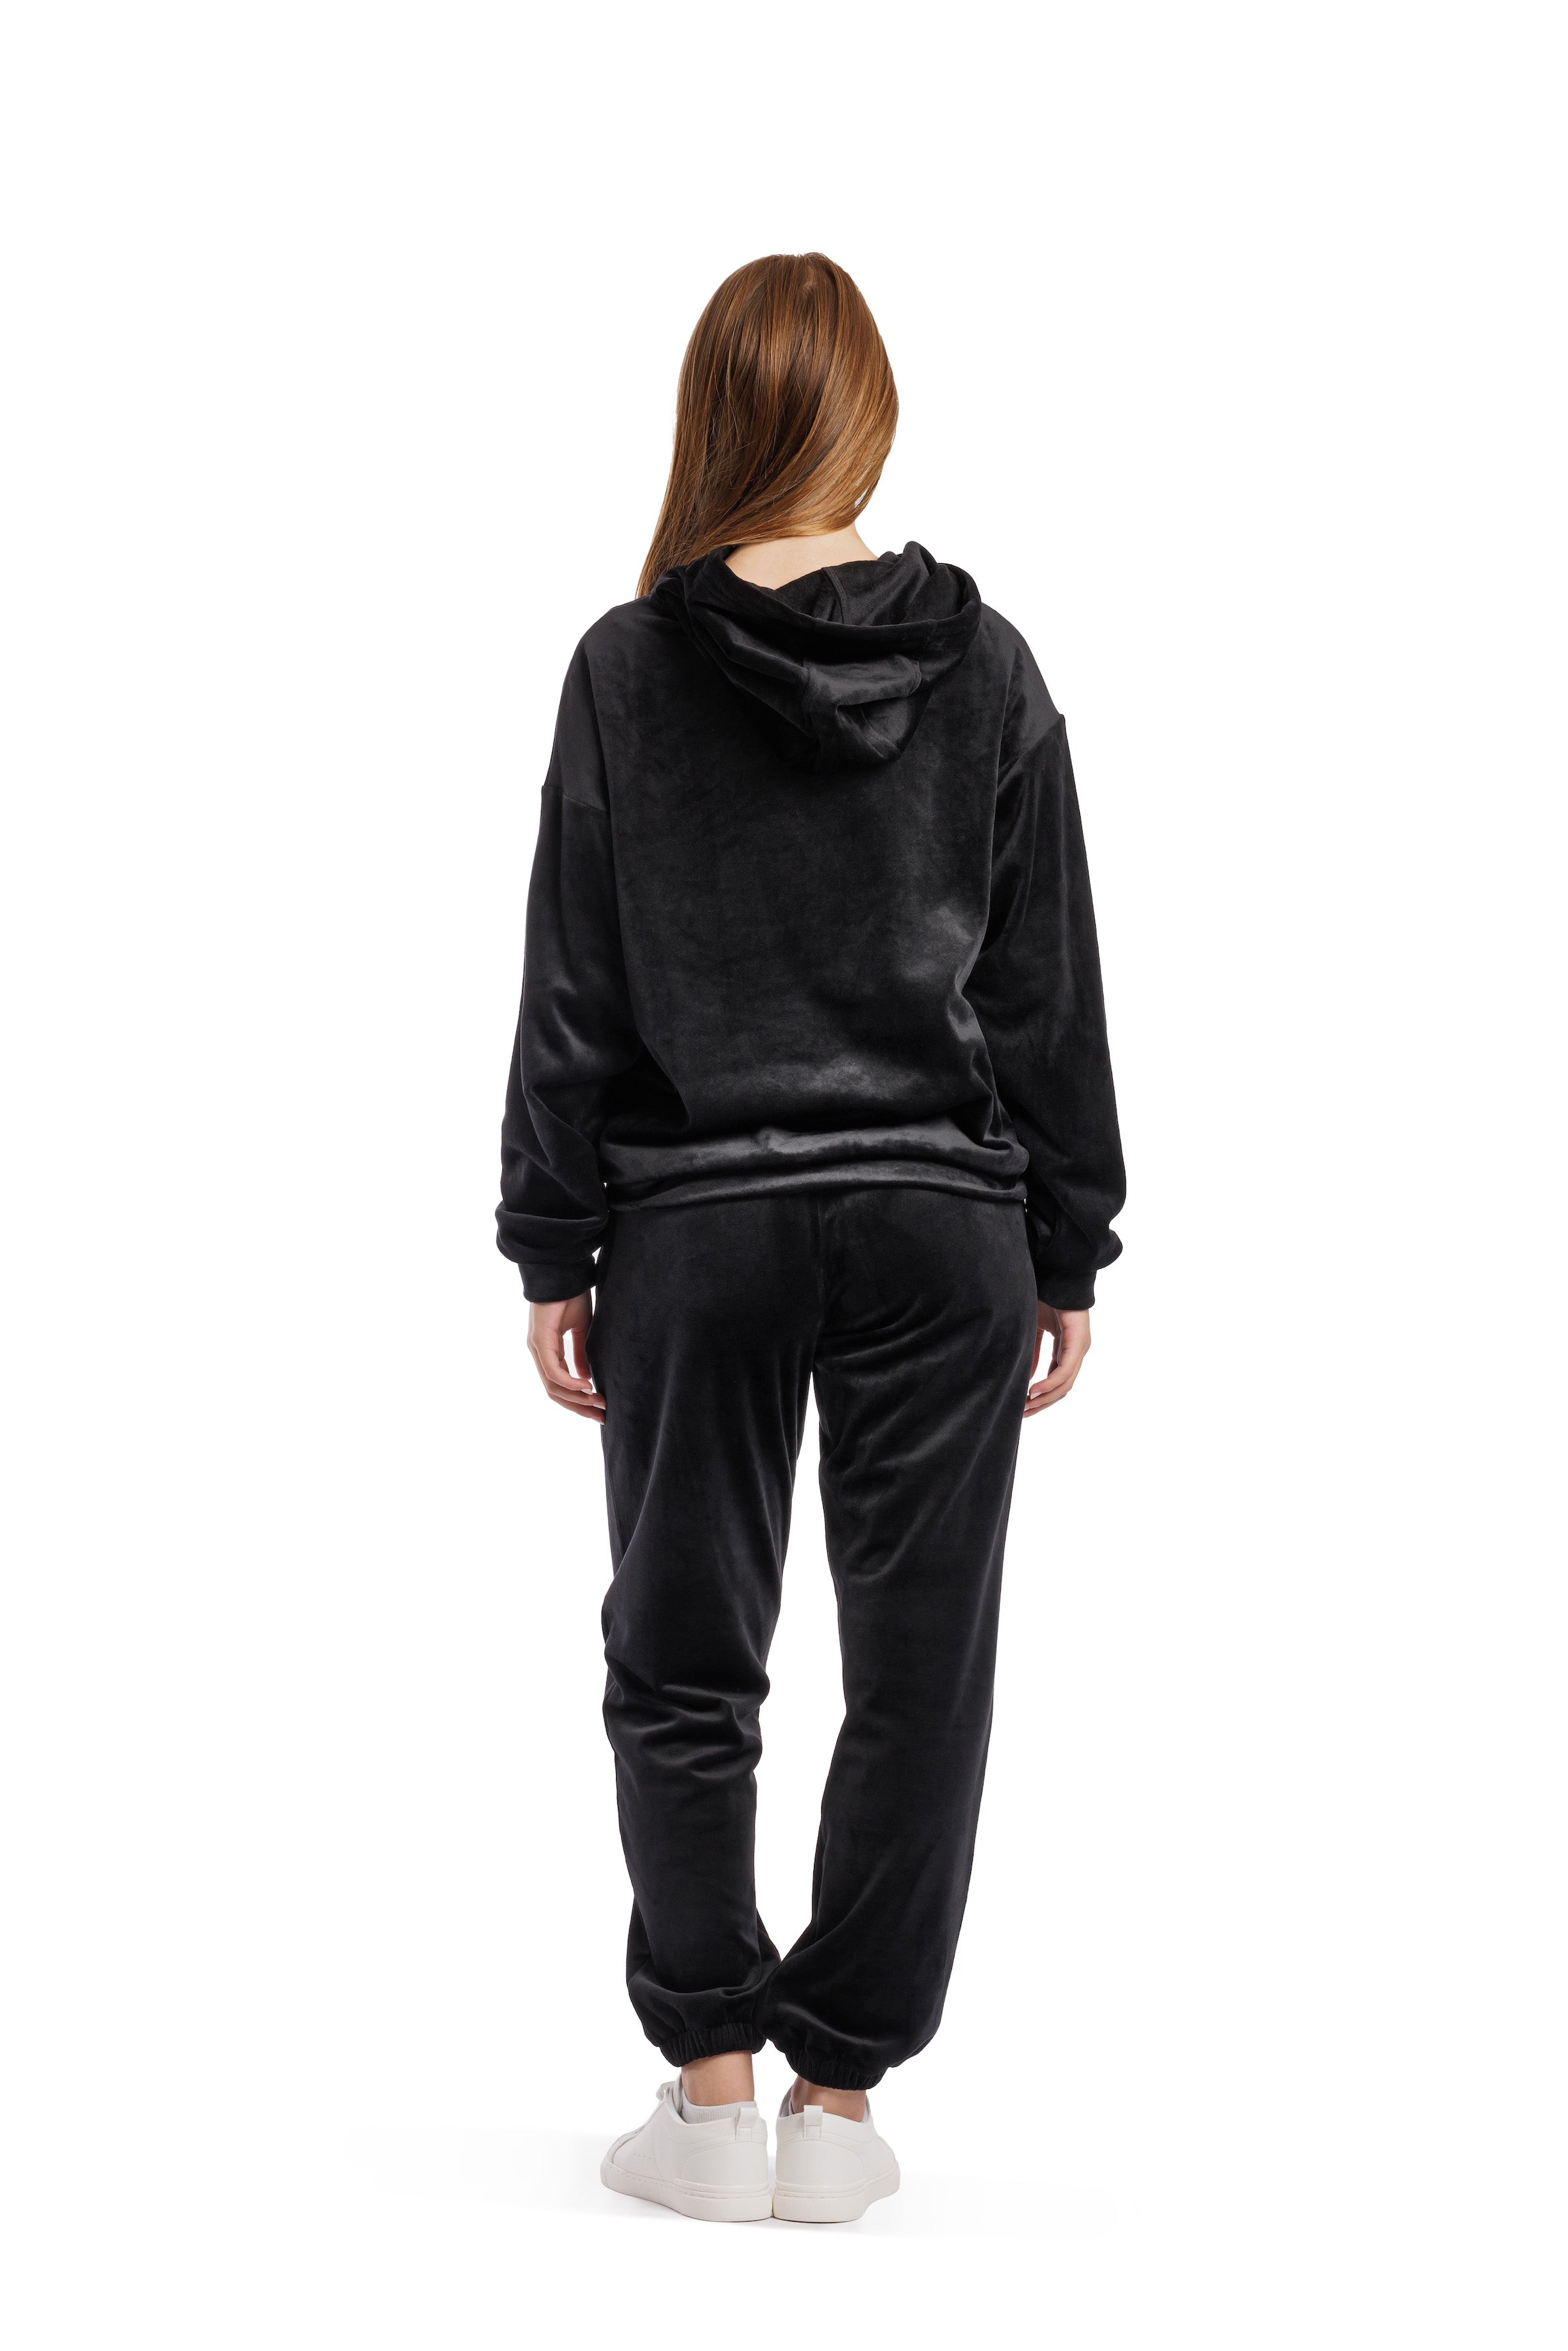 Women’s double-face velour sweatsuit set in black